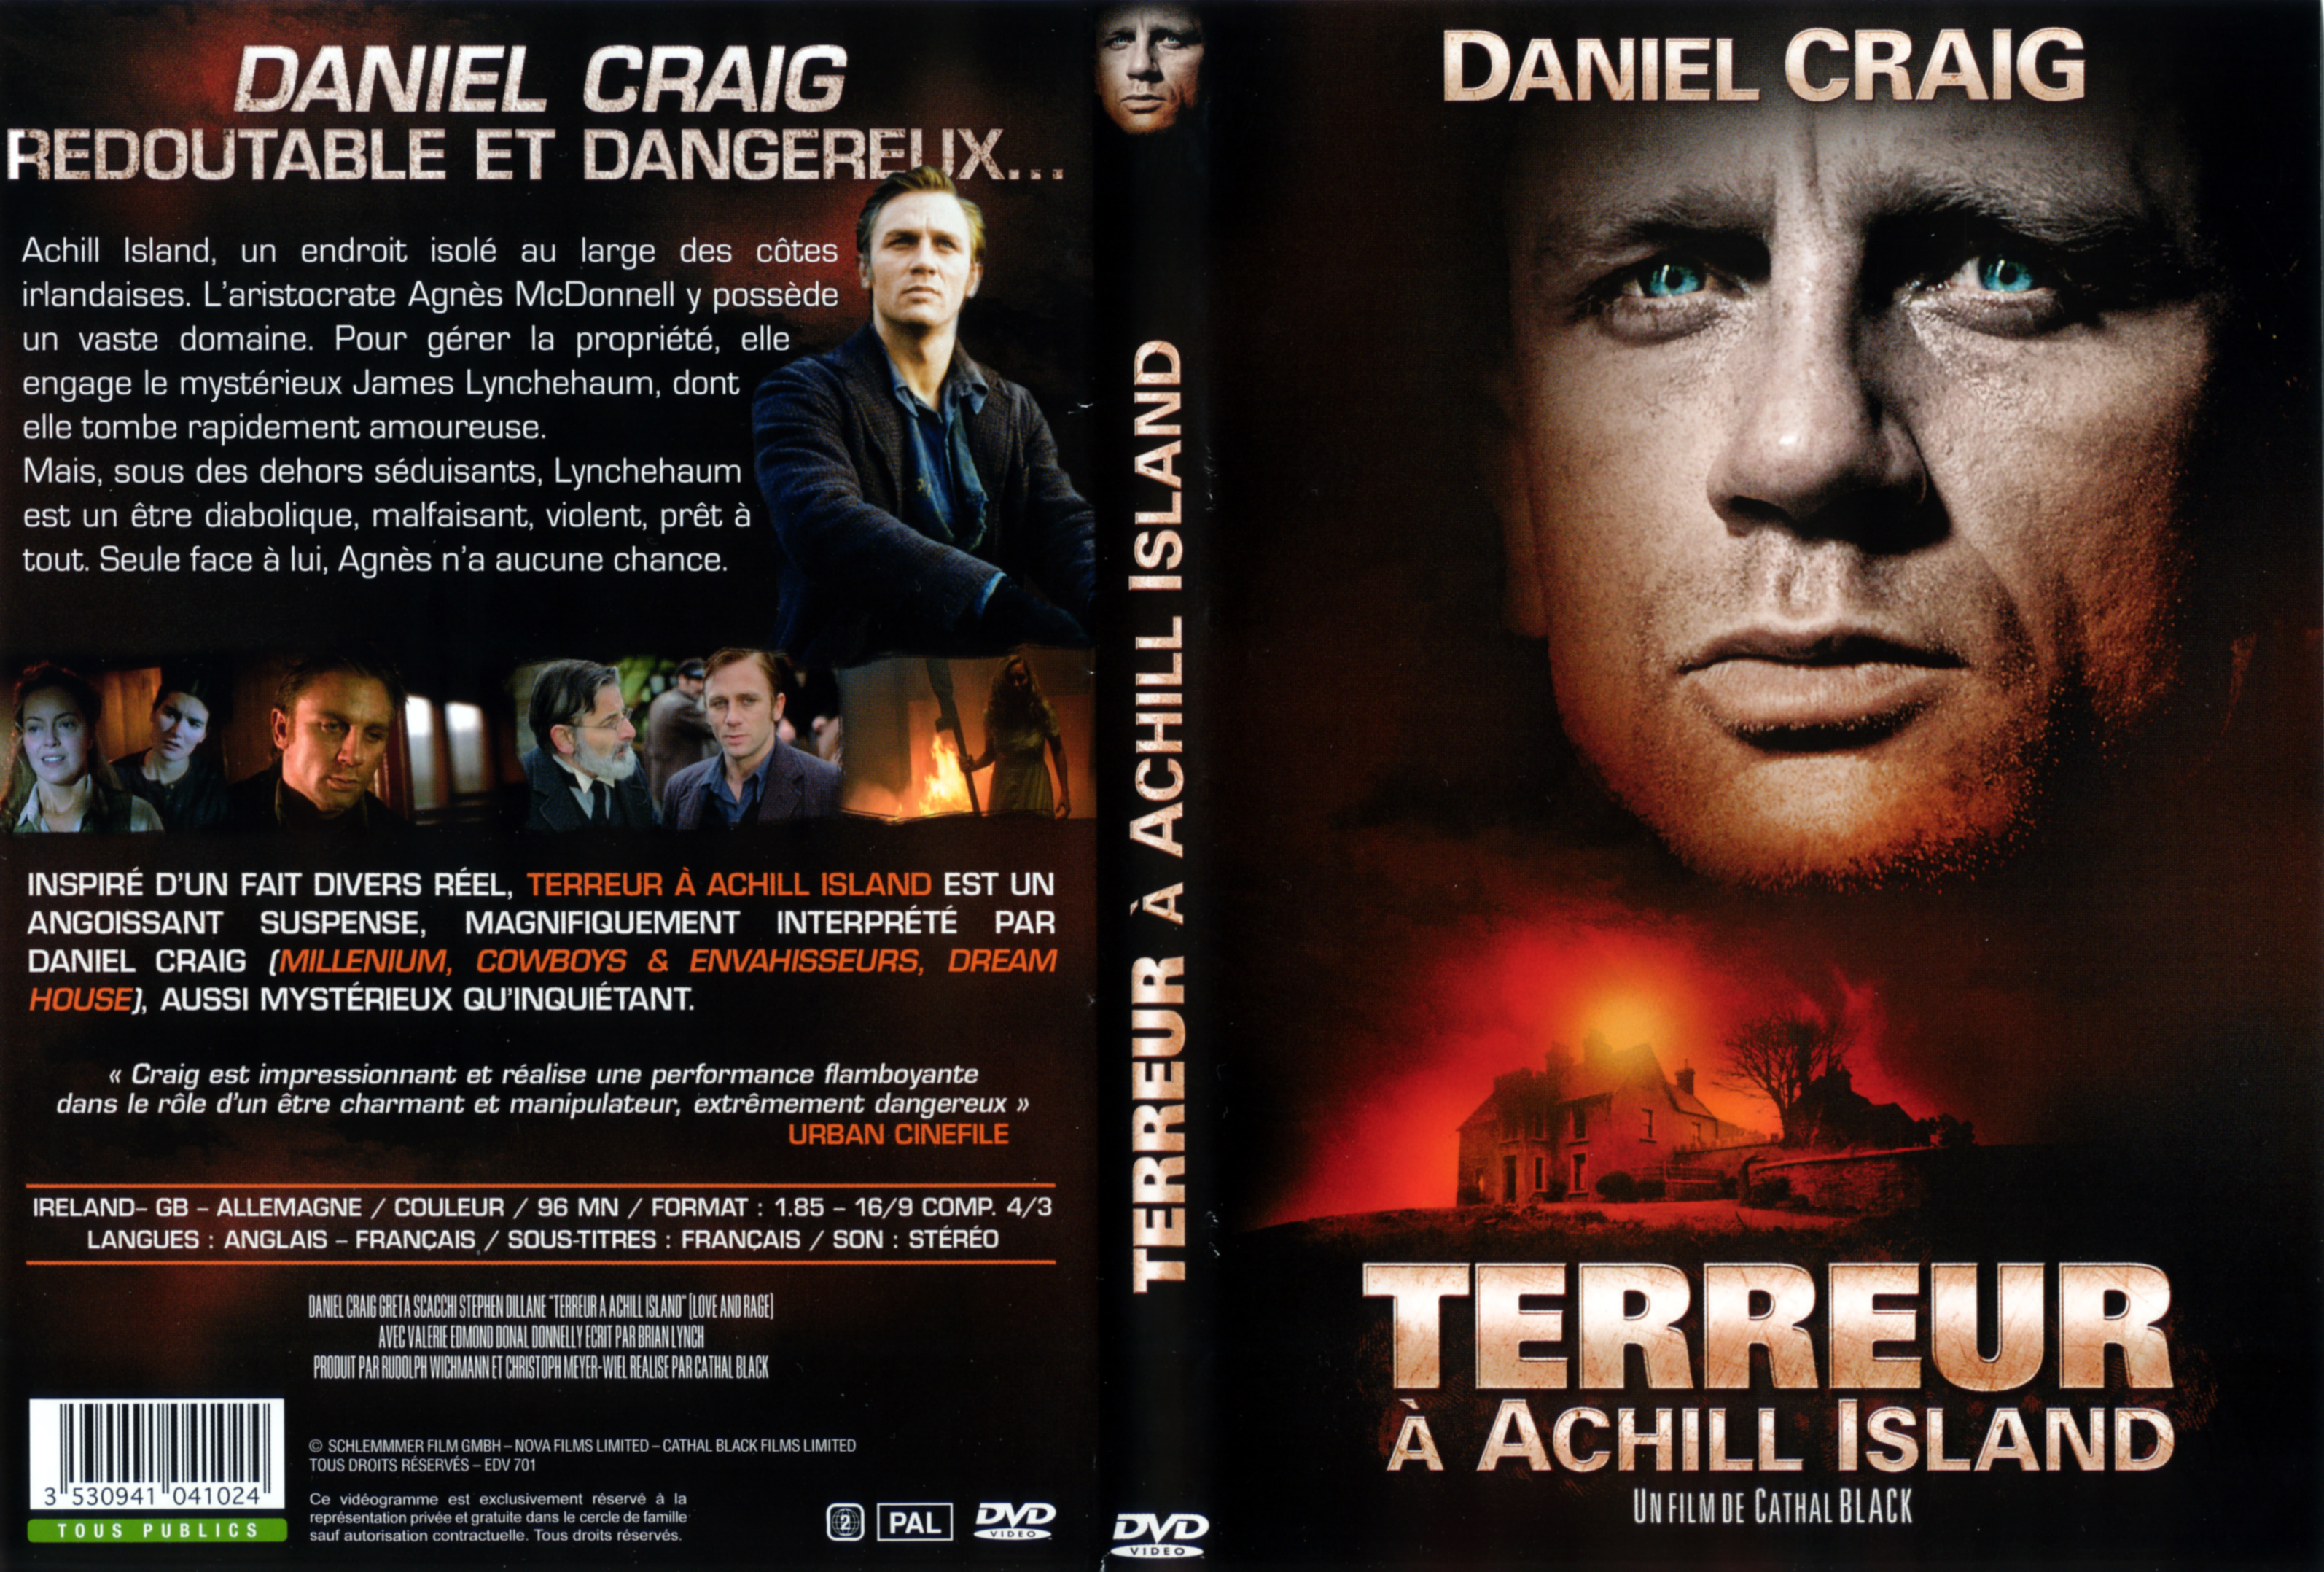 Jaquette DVD Terreur  Achill Island